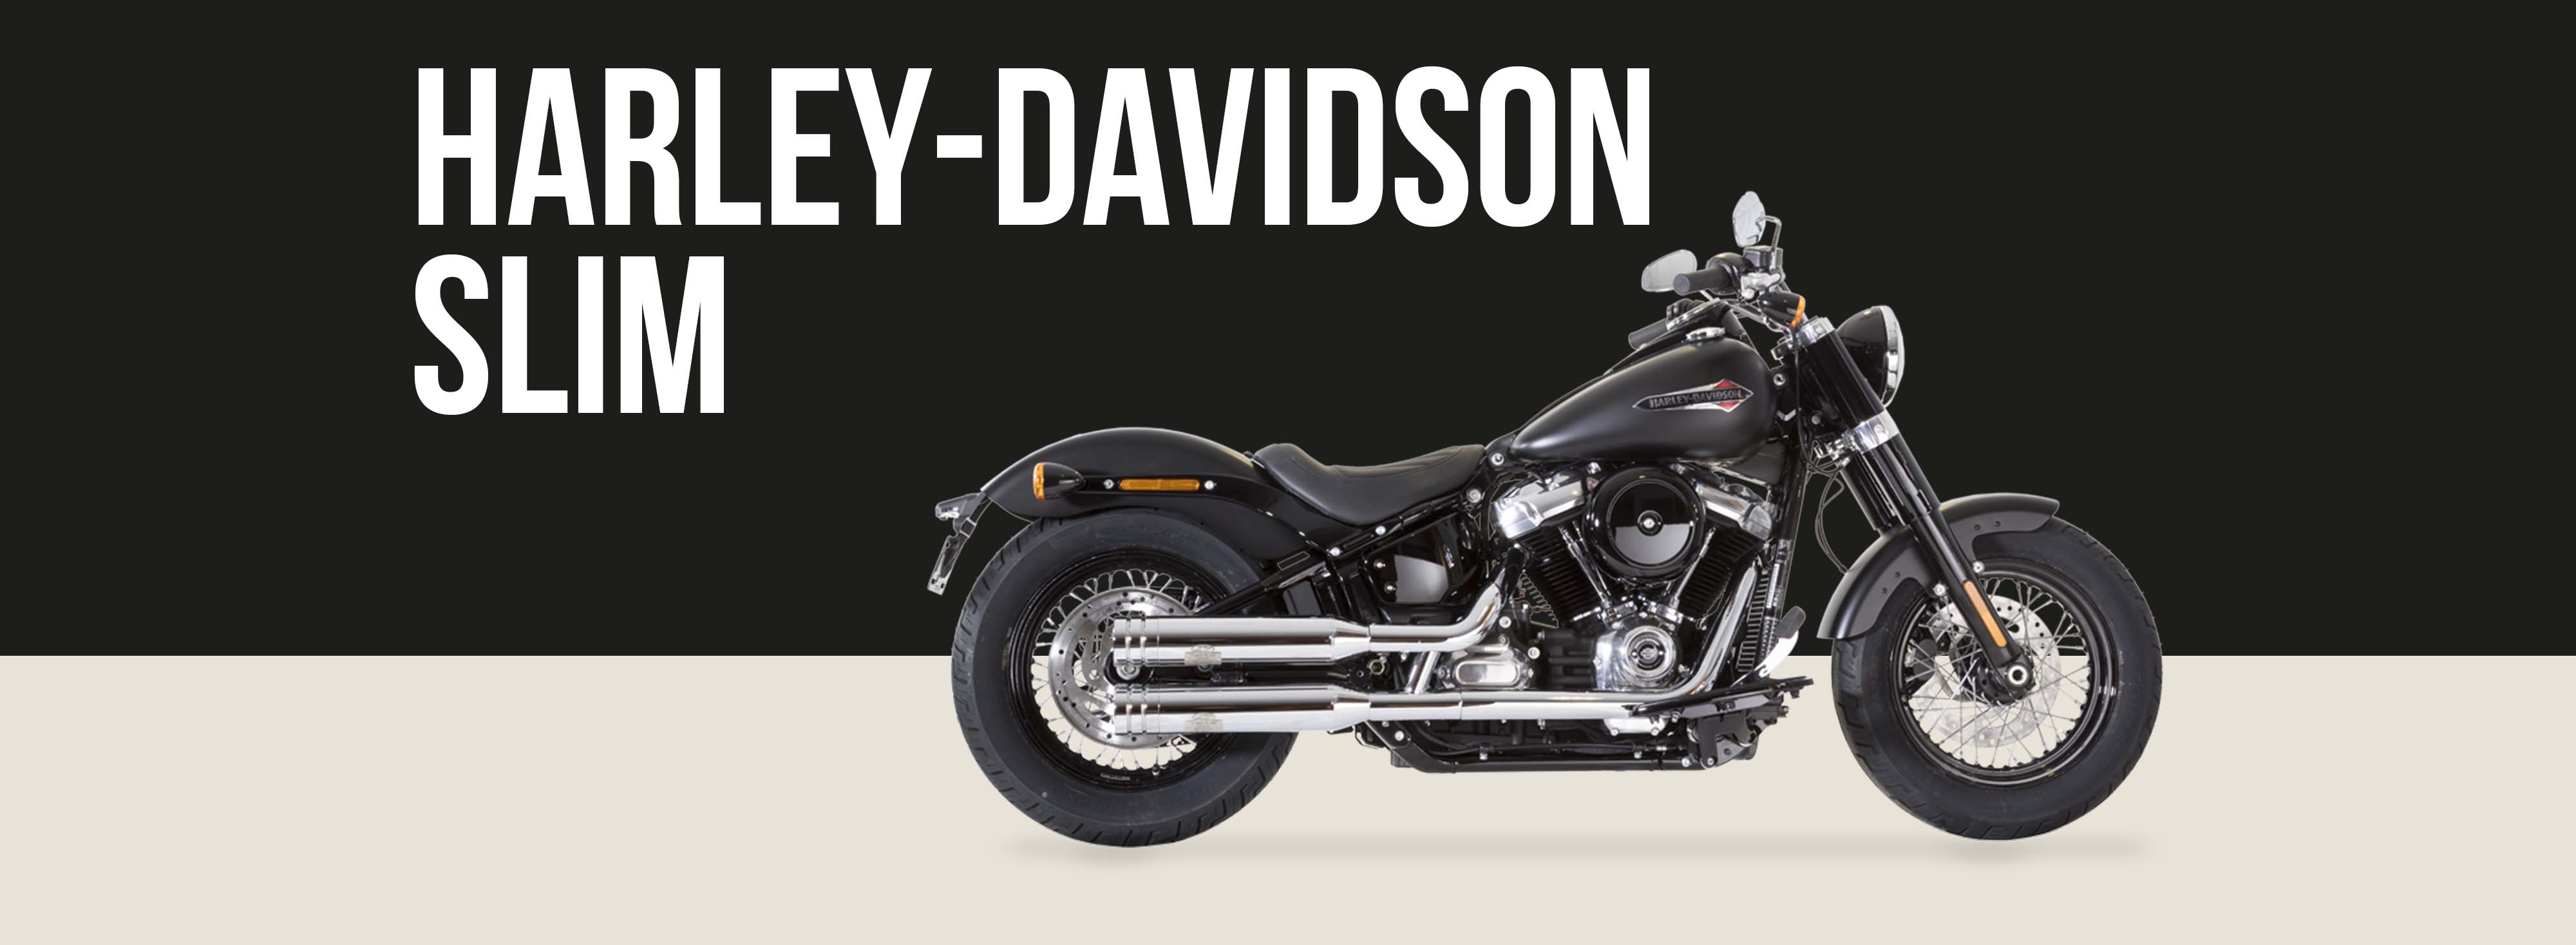 Harley-davidson Slim Motorcycle Brand Page Header